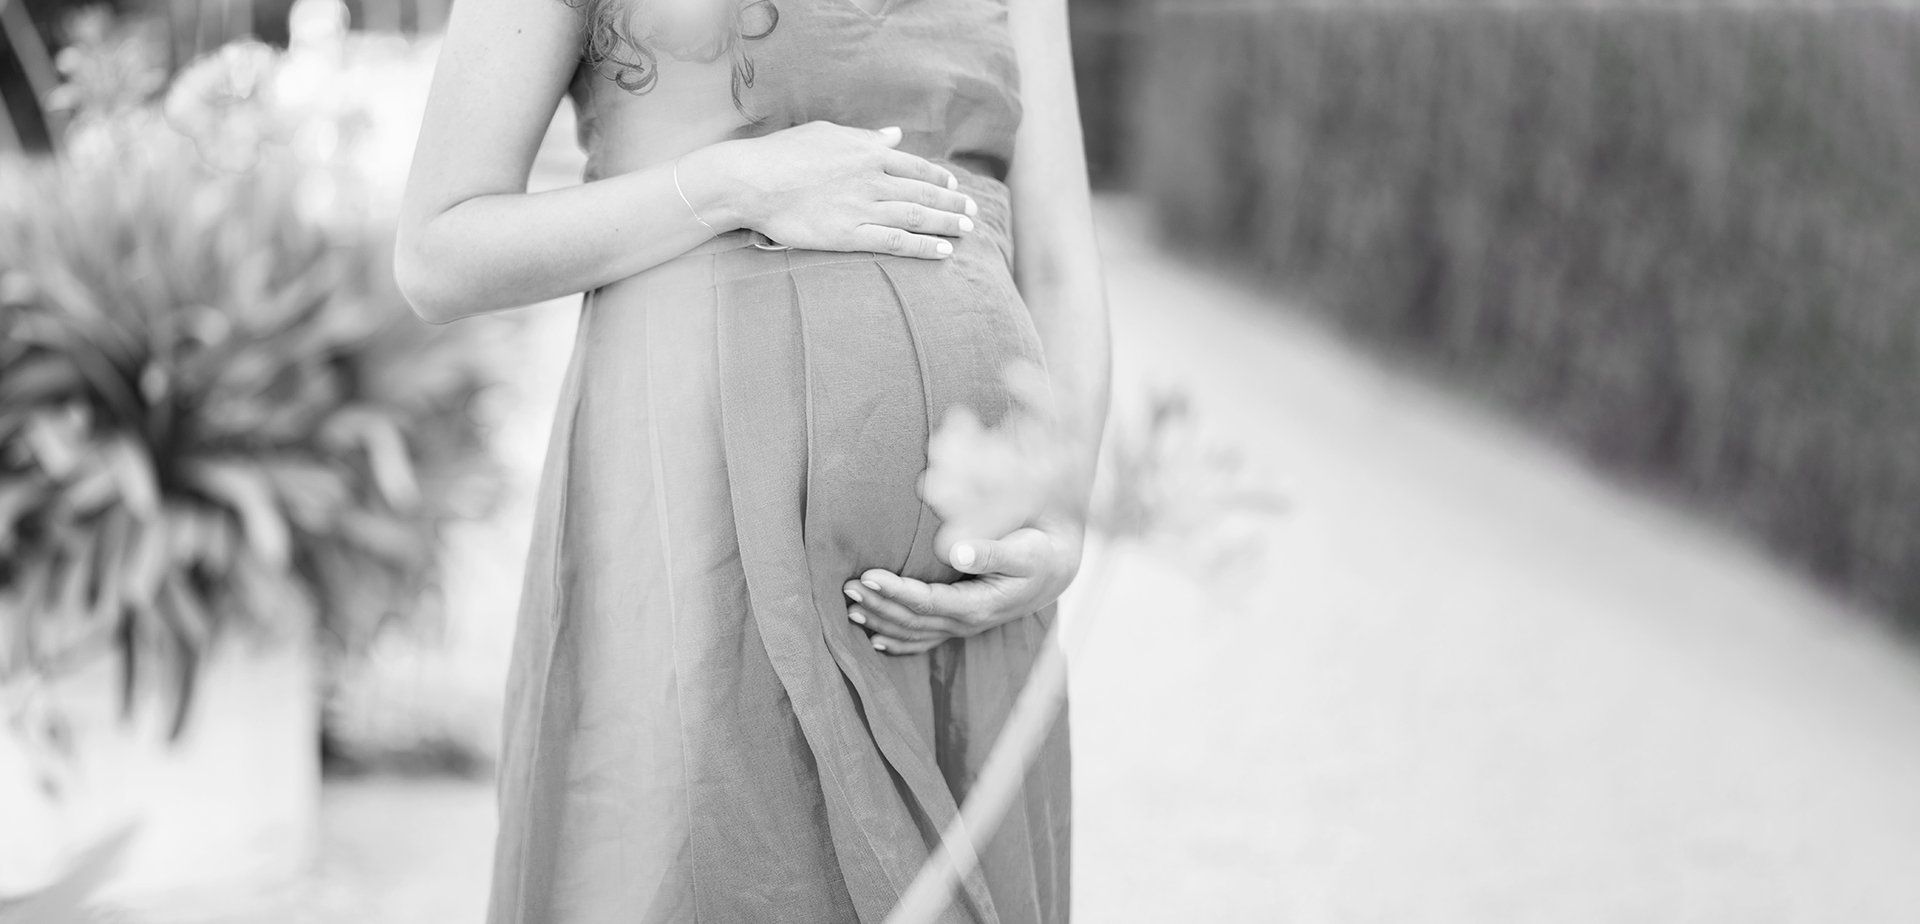 schwangerschaftsshooting-babybauchshooting-schwangerschaftsfotograf-schwangerschaftsfotoshooting-muenchen